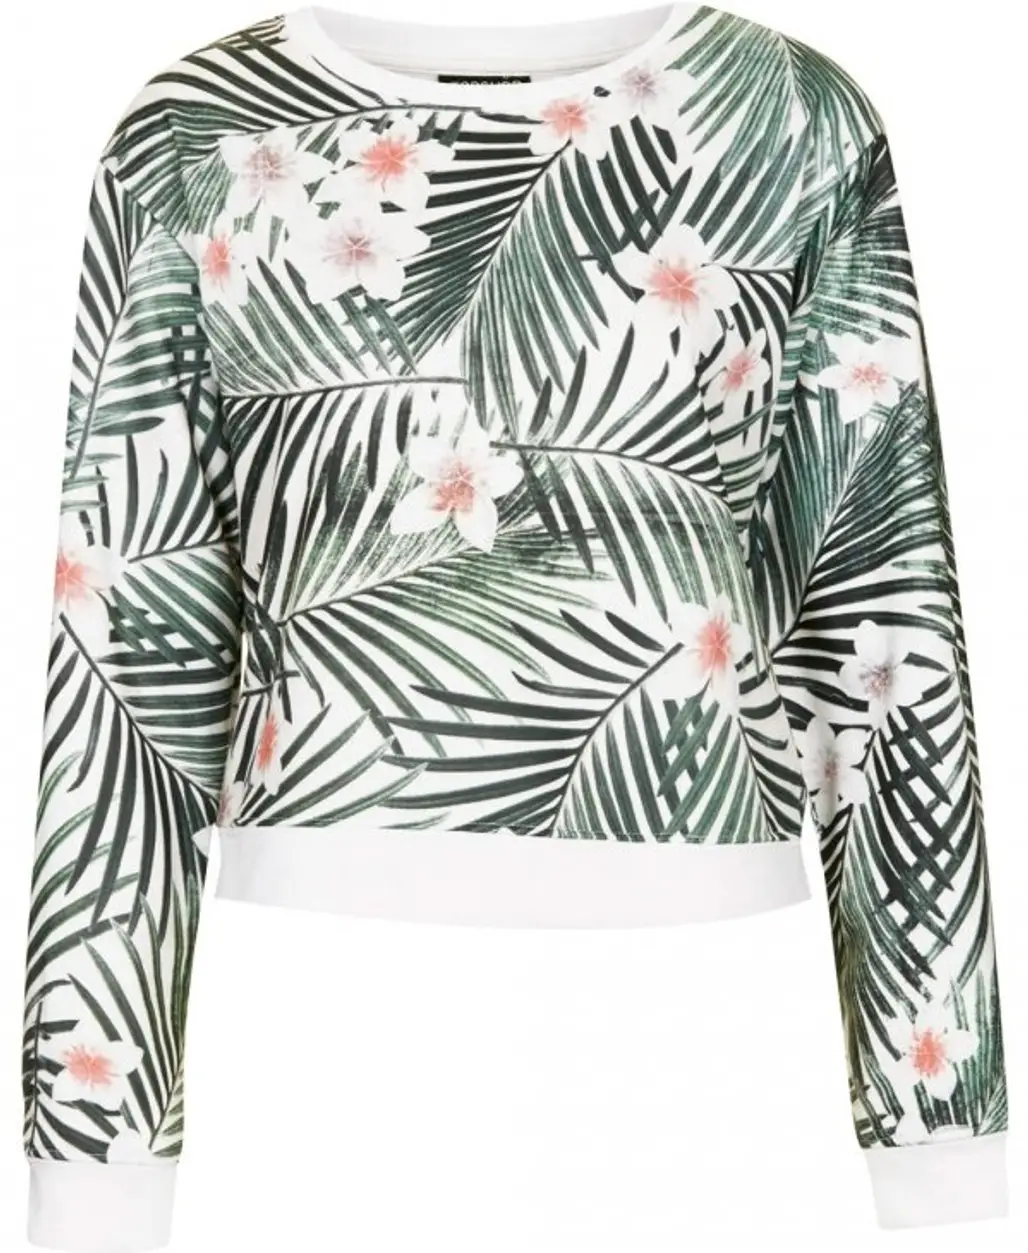 Topshop Palm Print Sweater